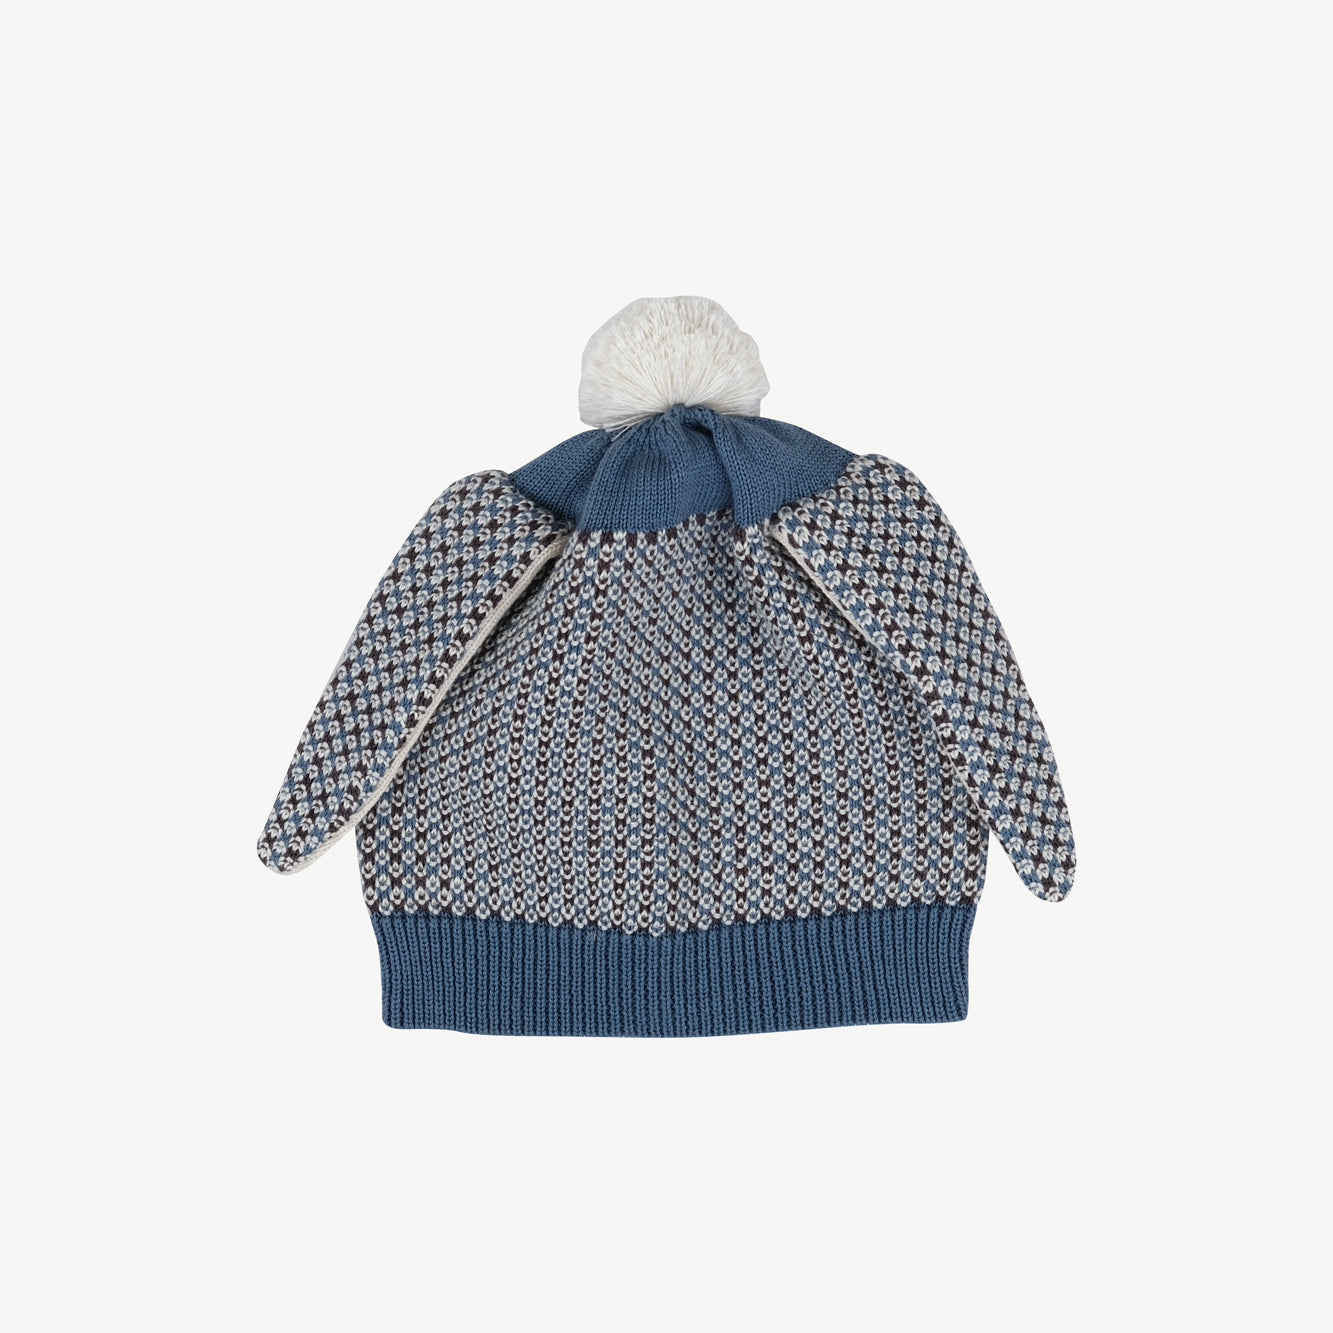 'multi' blue mirage knit bunny beanie